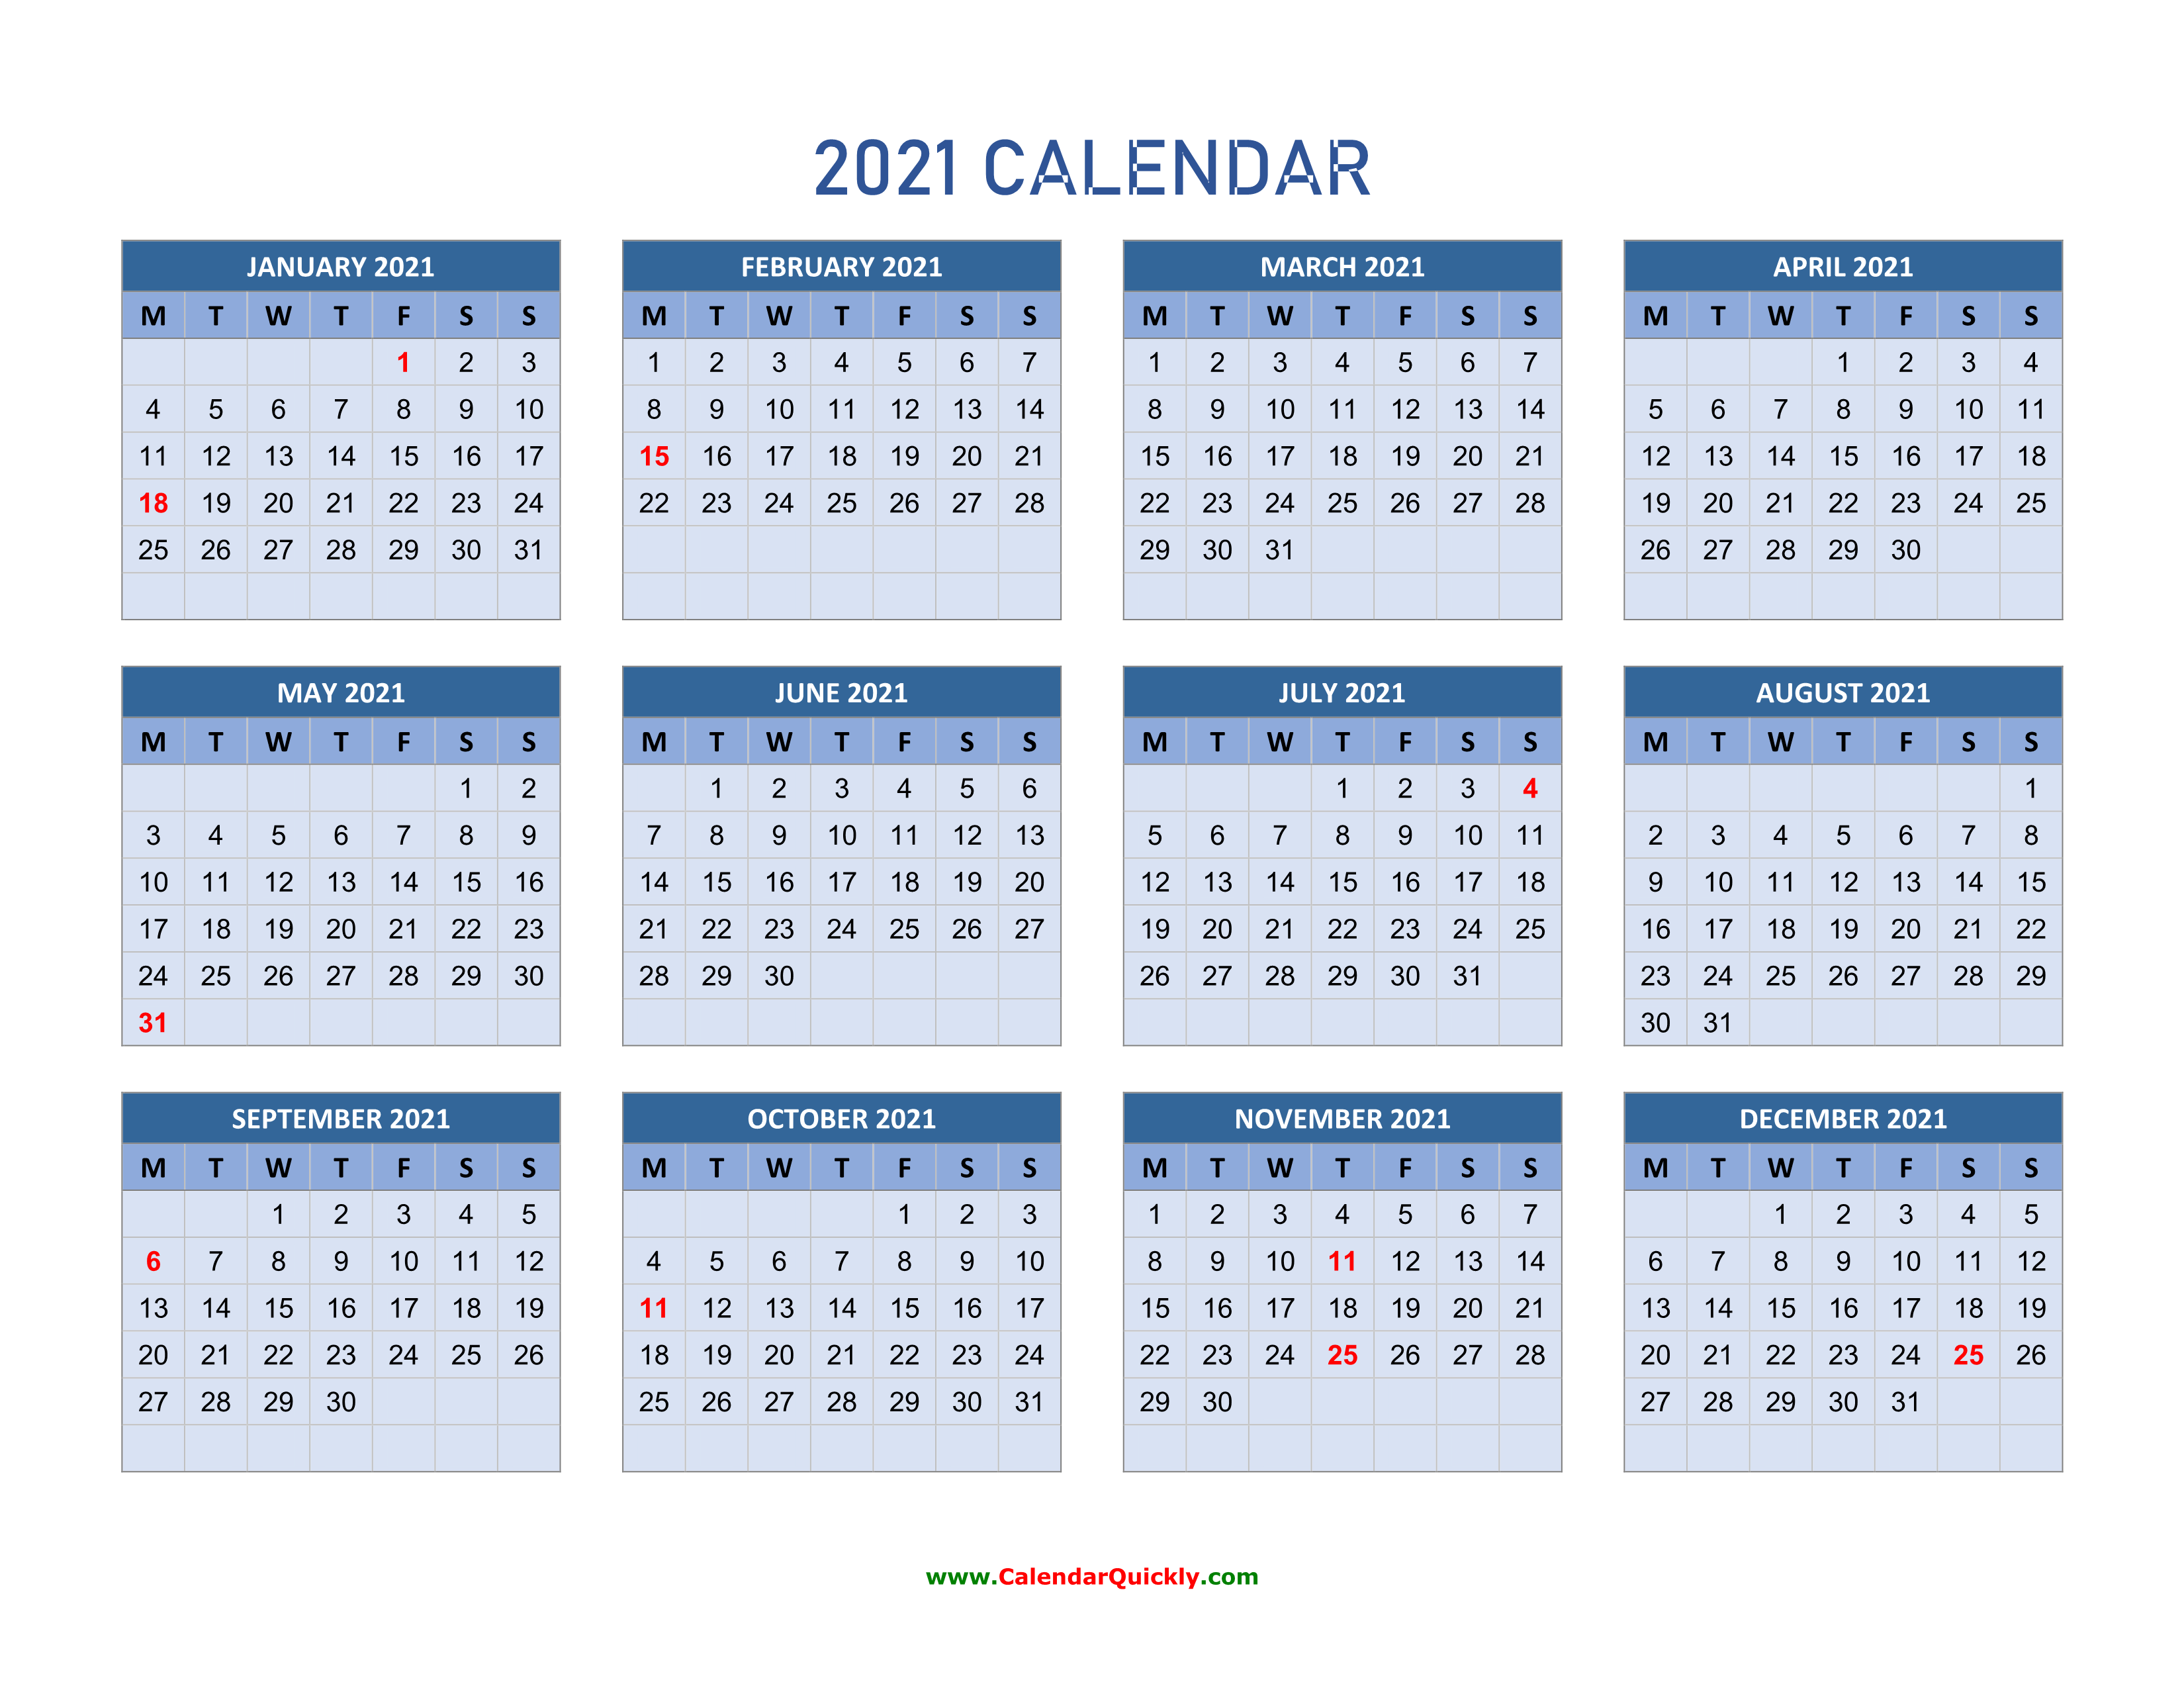 Monday 2021 Calendar Horizontal | Calendar Quickly